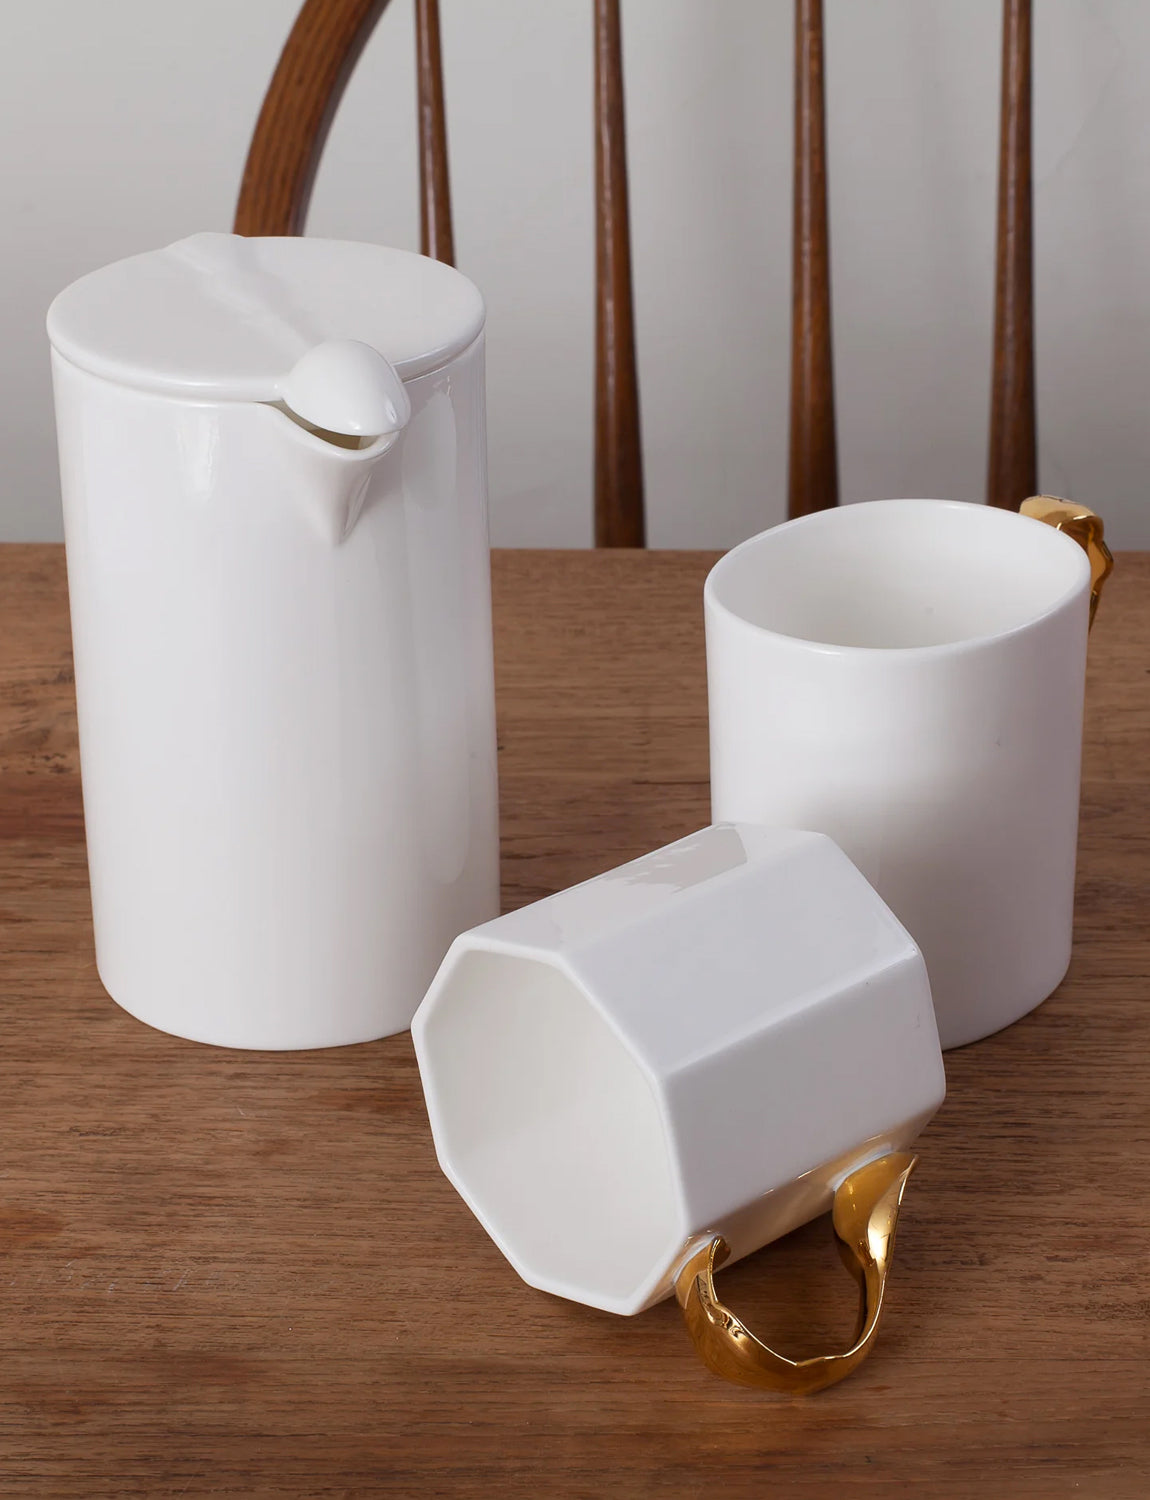 Twig Cutlery Oval Mug with Gold Handle